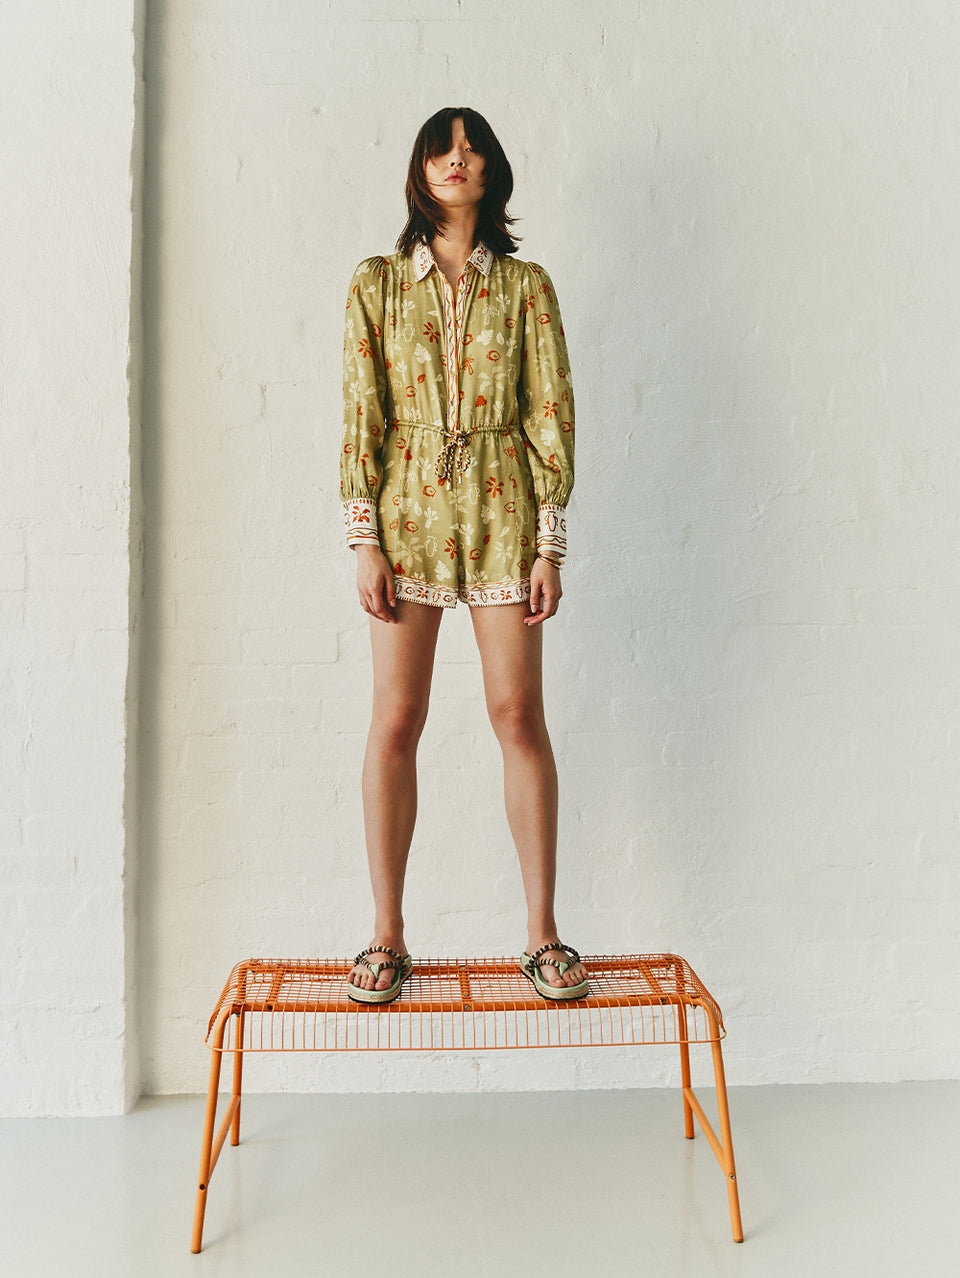 Model Wearing KIVARI Salome Playsuit, standing on chair